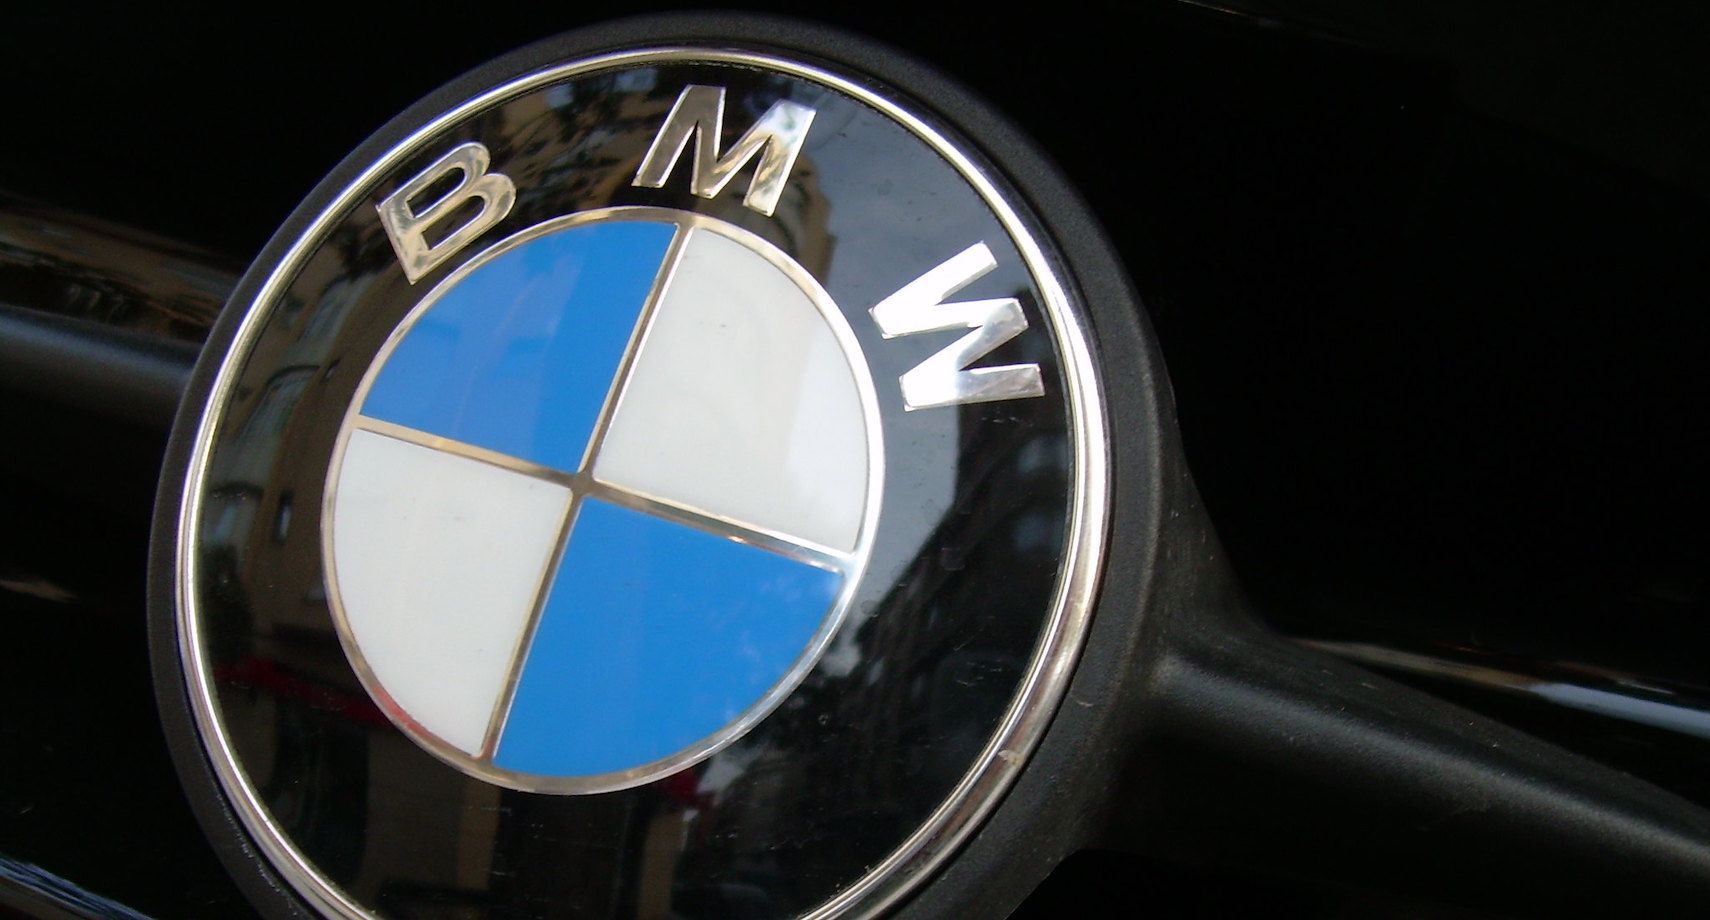 BMW logo badge on car